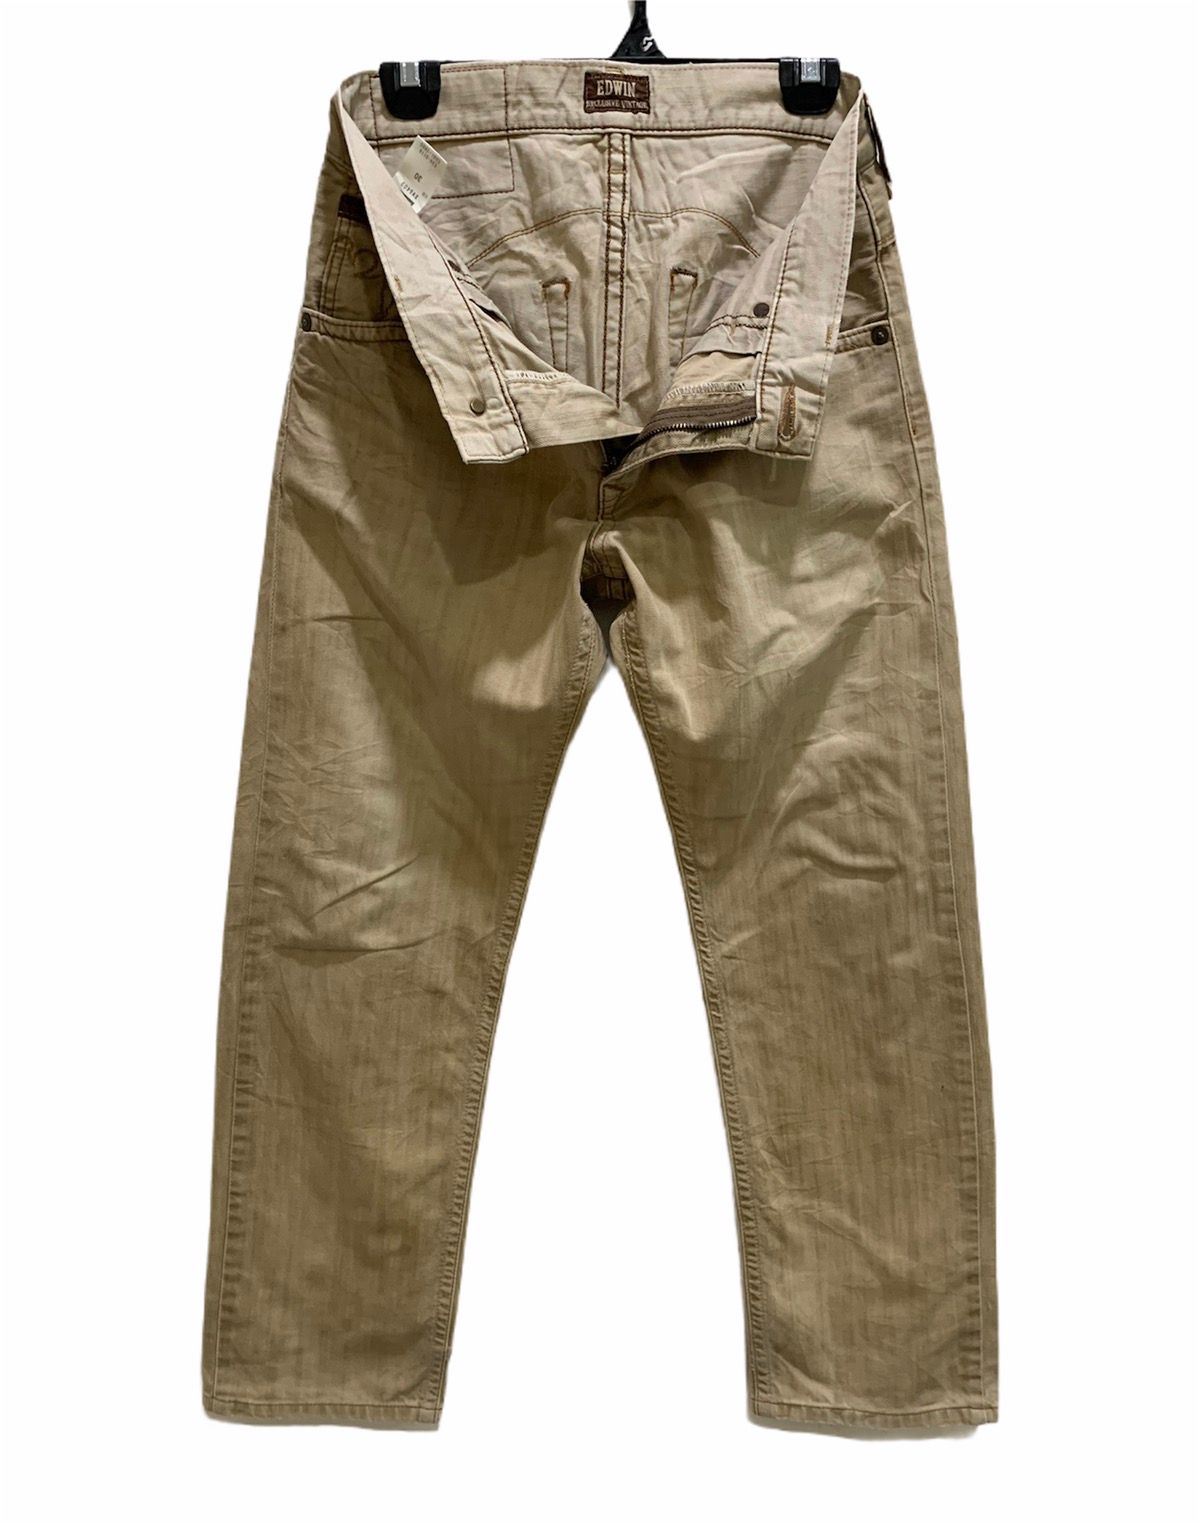 Edwin EDWIN EXCLUSIVE VINTAGE Redmoon Craft Style Denim Jean Pant Size US 32 / EU 48 - 3 Thumbnail